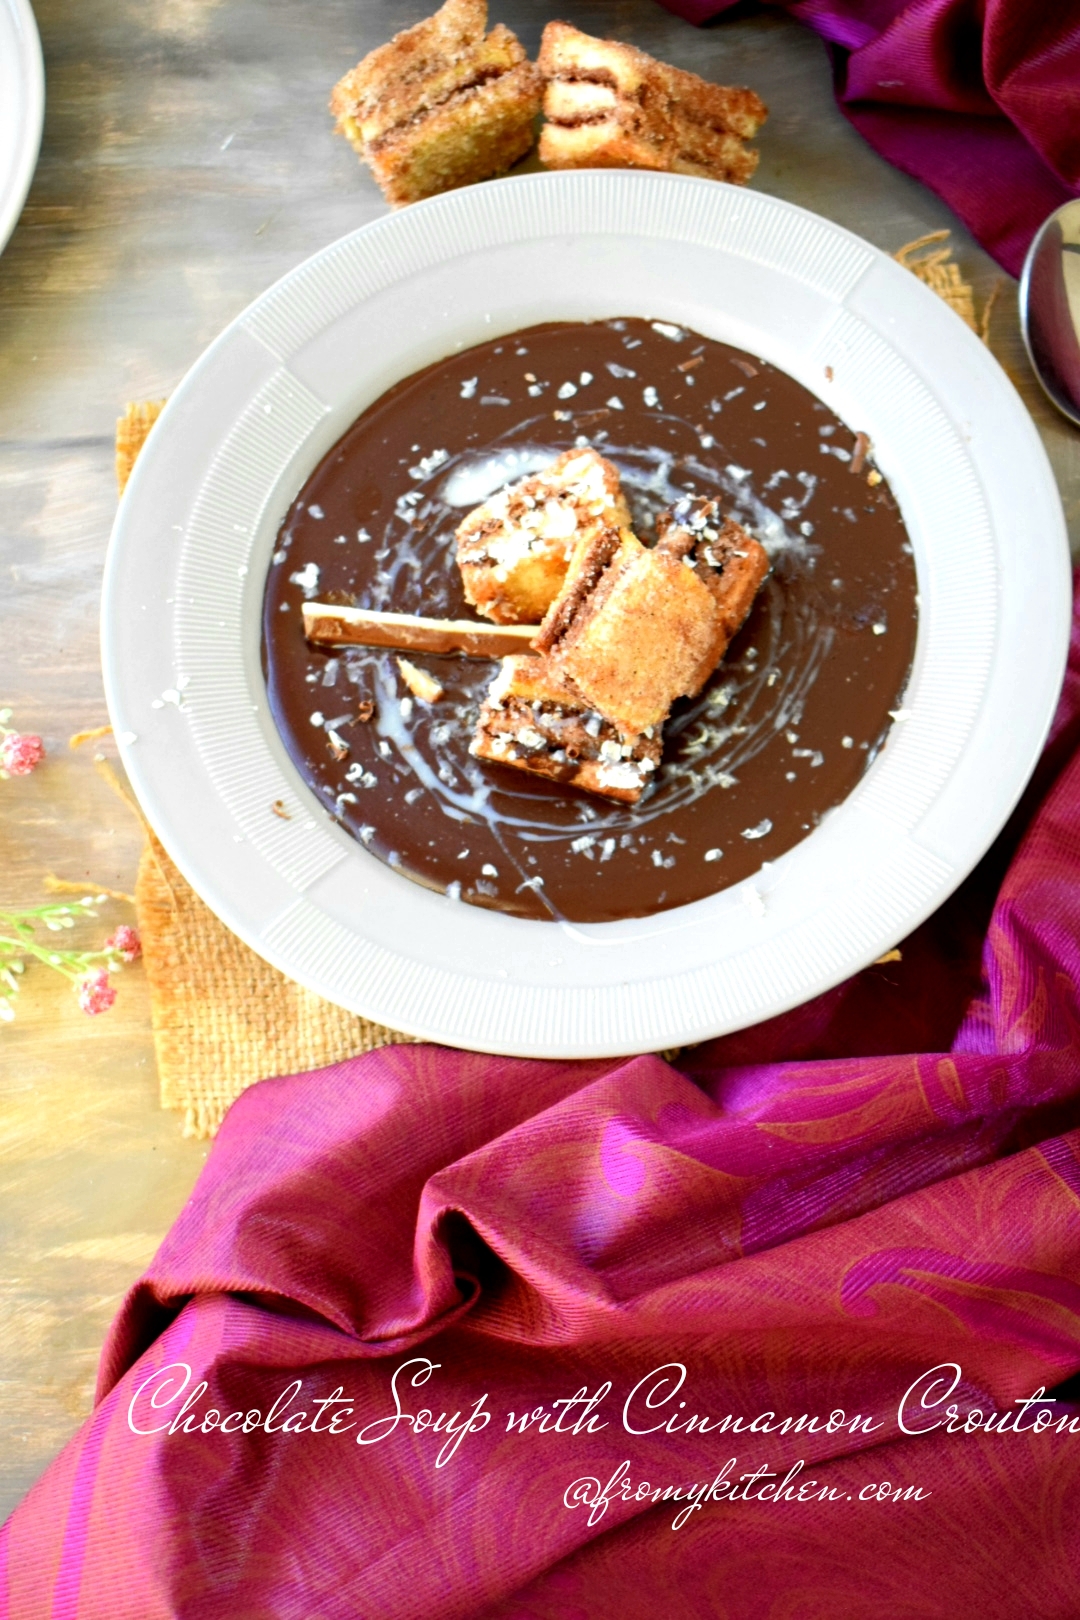 Chocolate Soup with Cinnamon Crouton